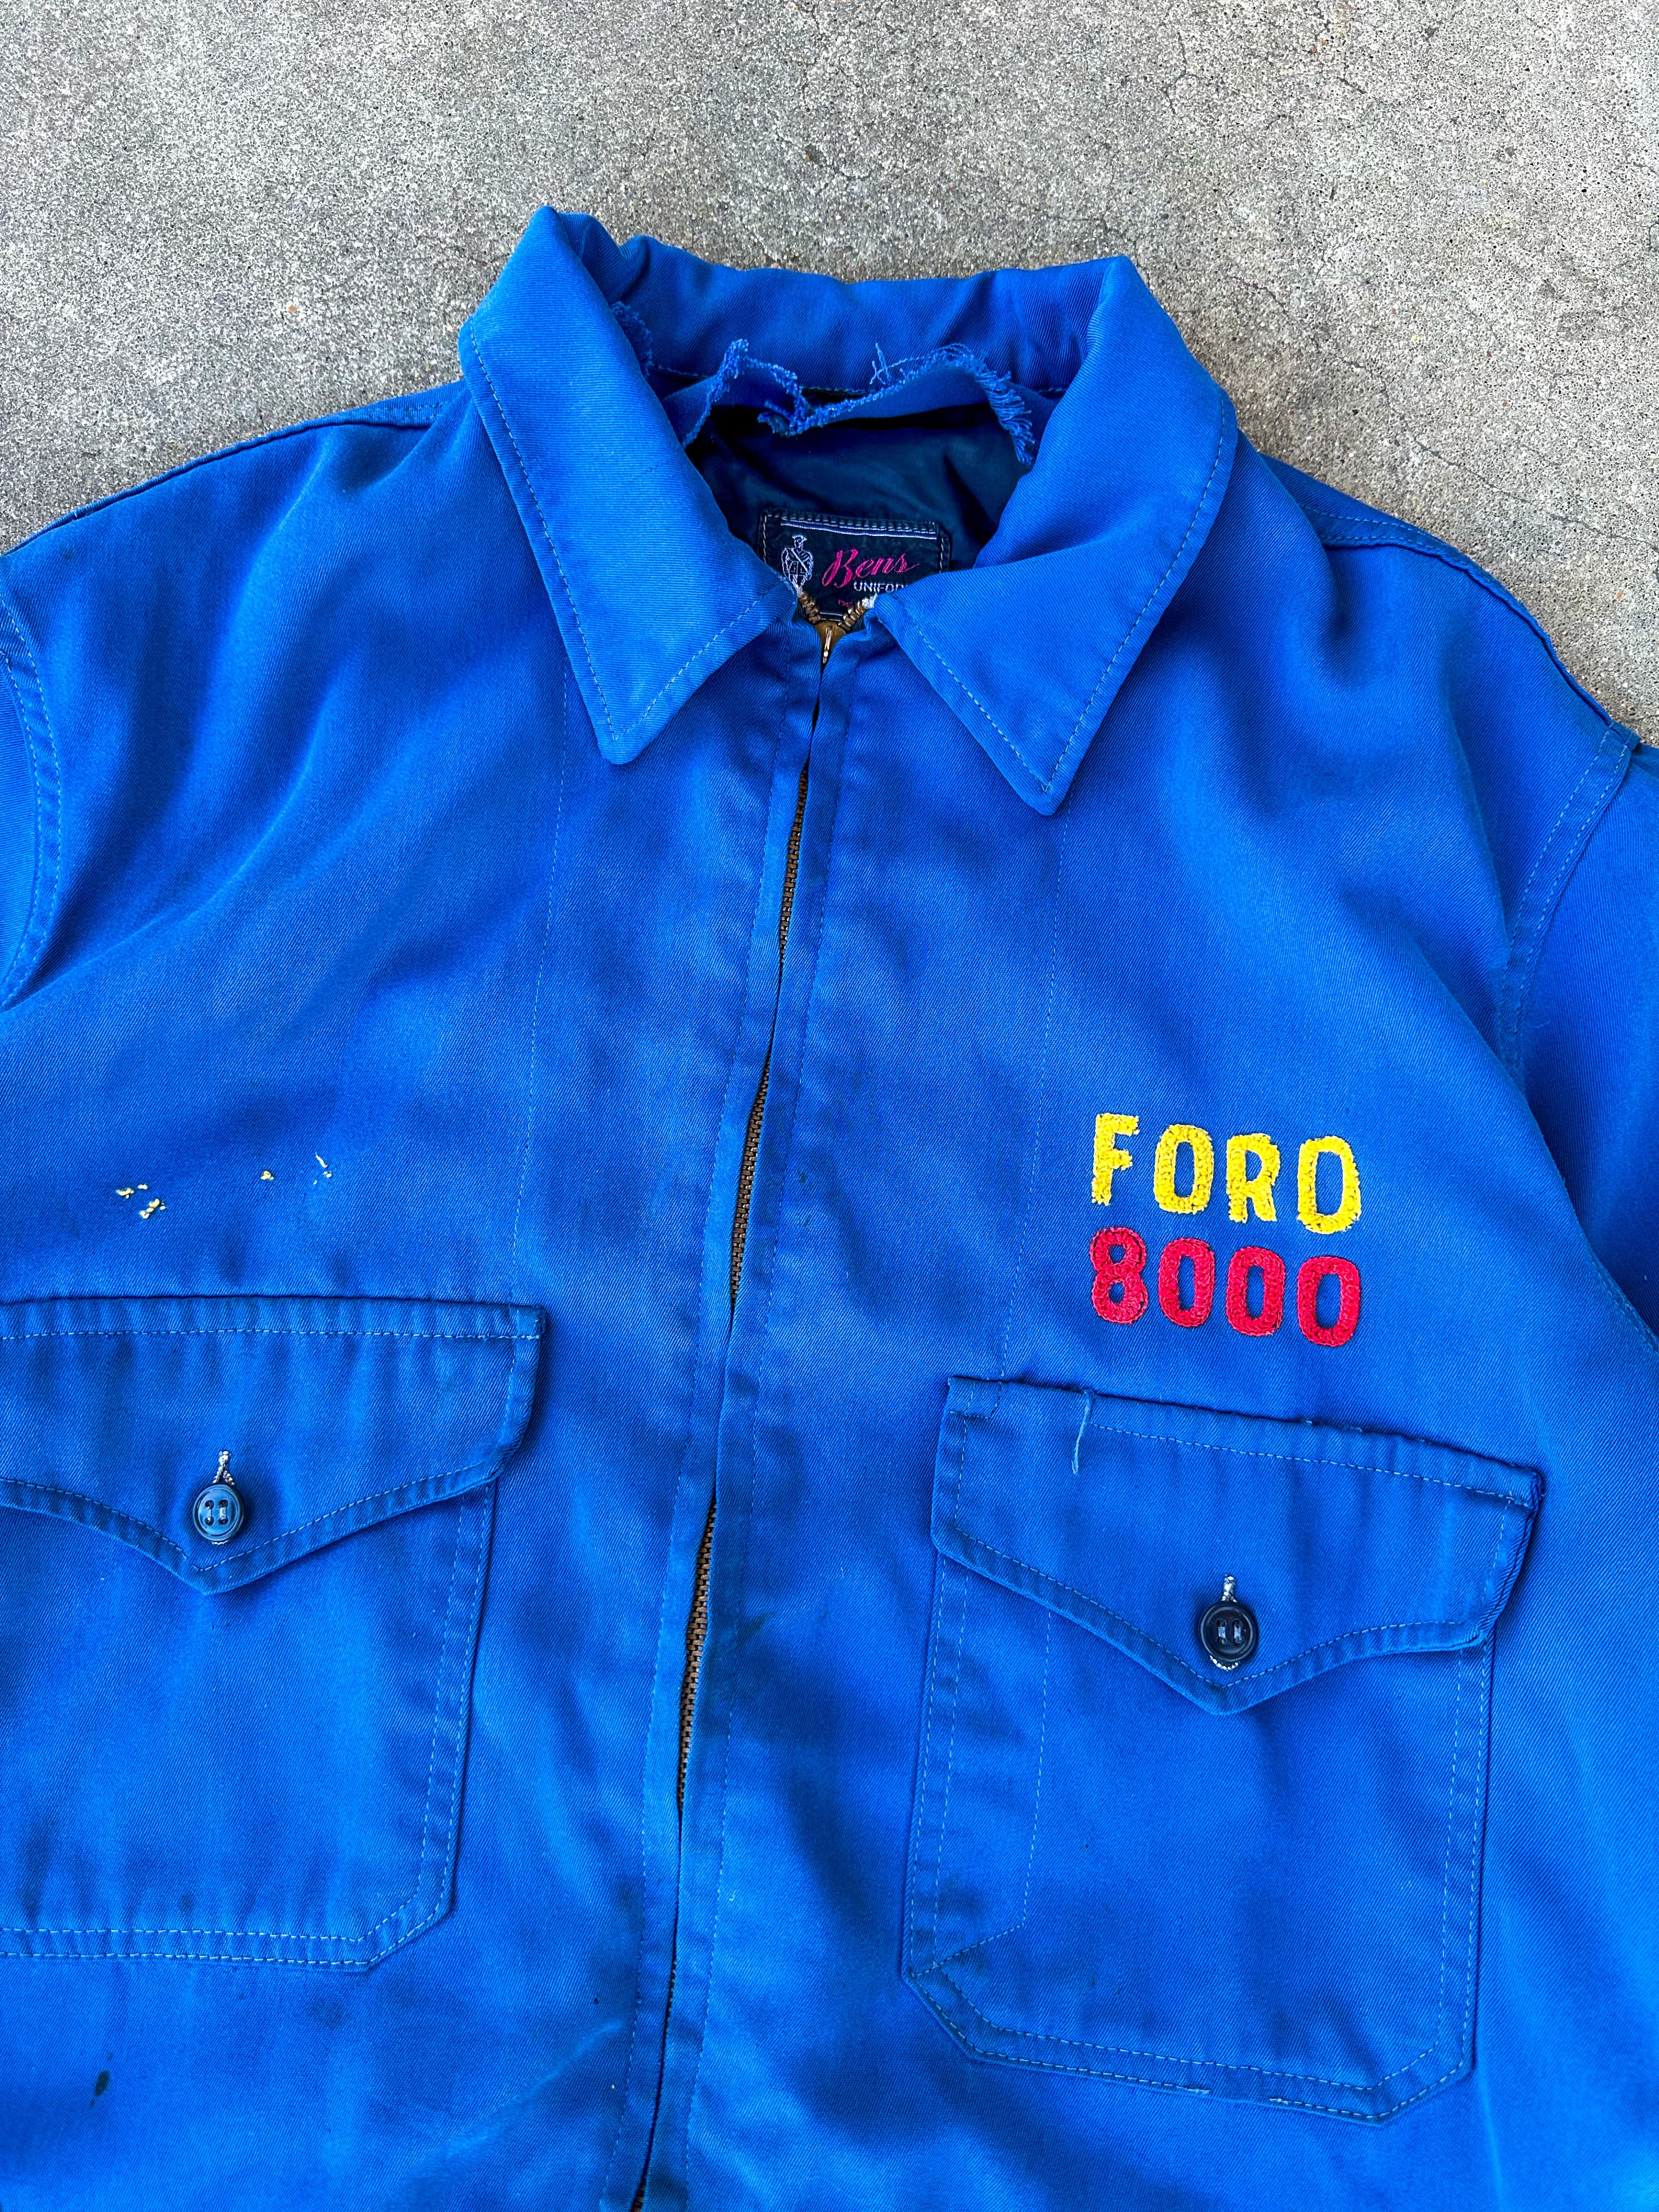 1950s Ford 8000 Chainstitch Jacket (M)